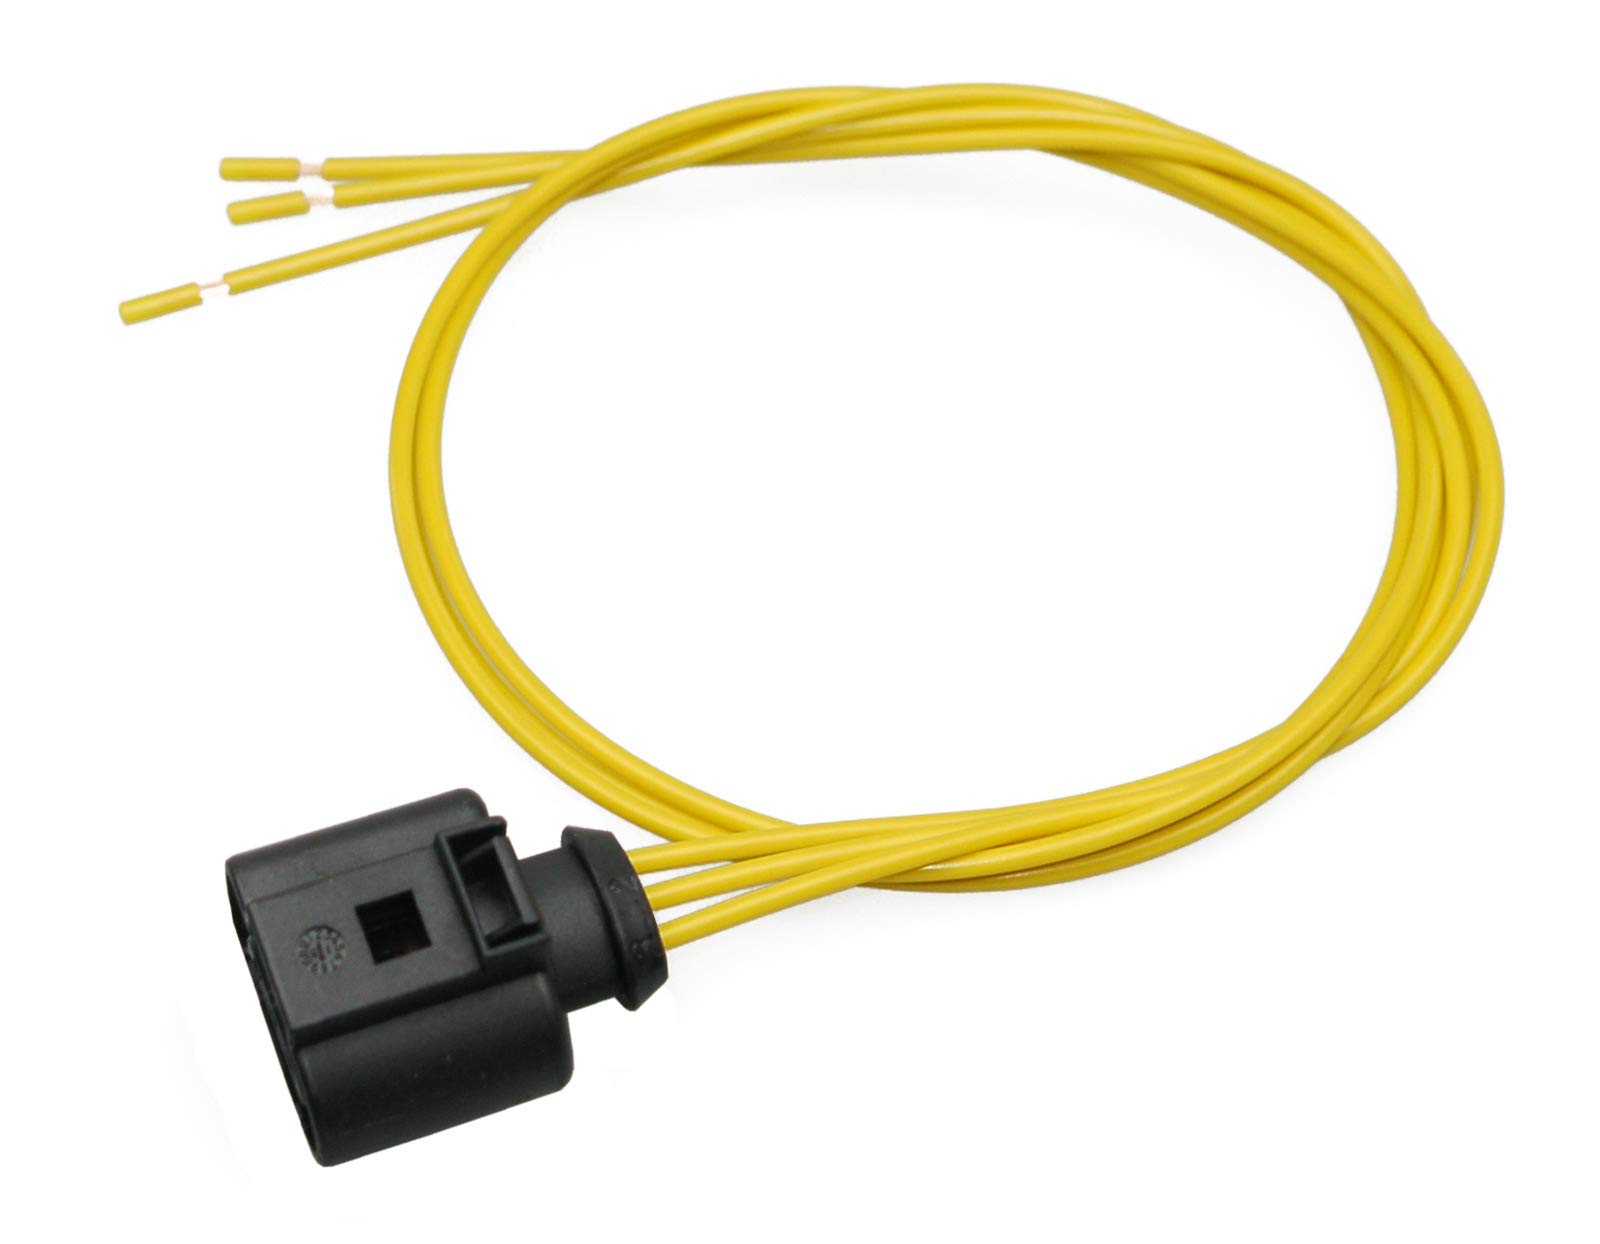 3D0 973 703 Reparatursatz 3-pol. Stecker Steckverbinder Connector OEM 3D0973703 von Cable Solution